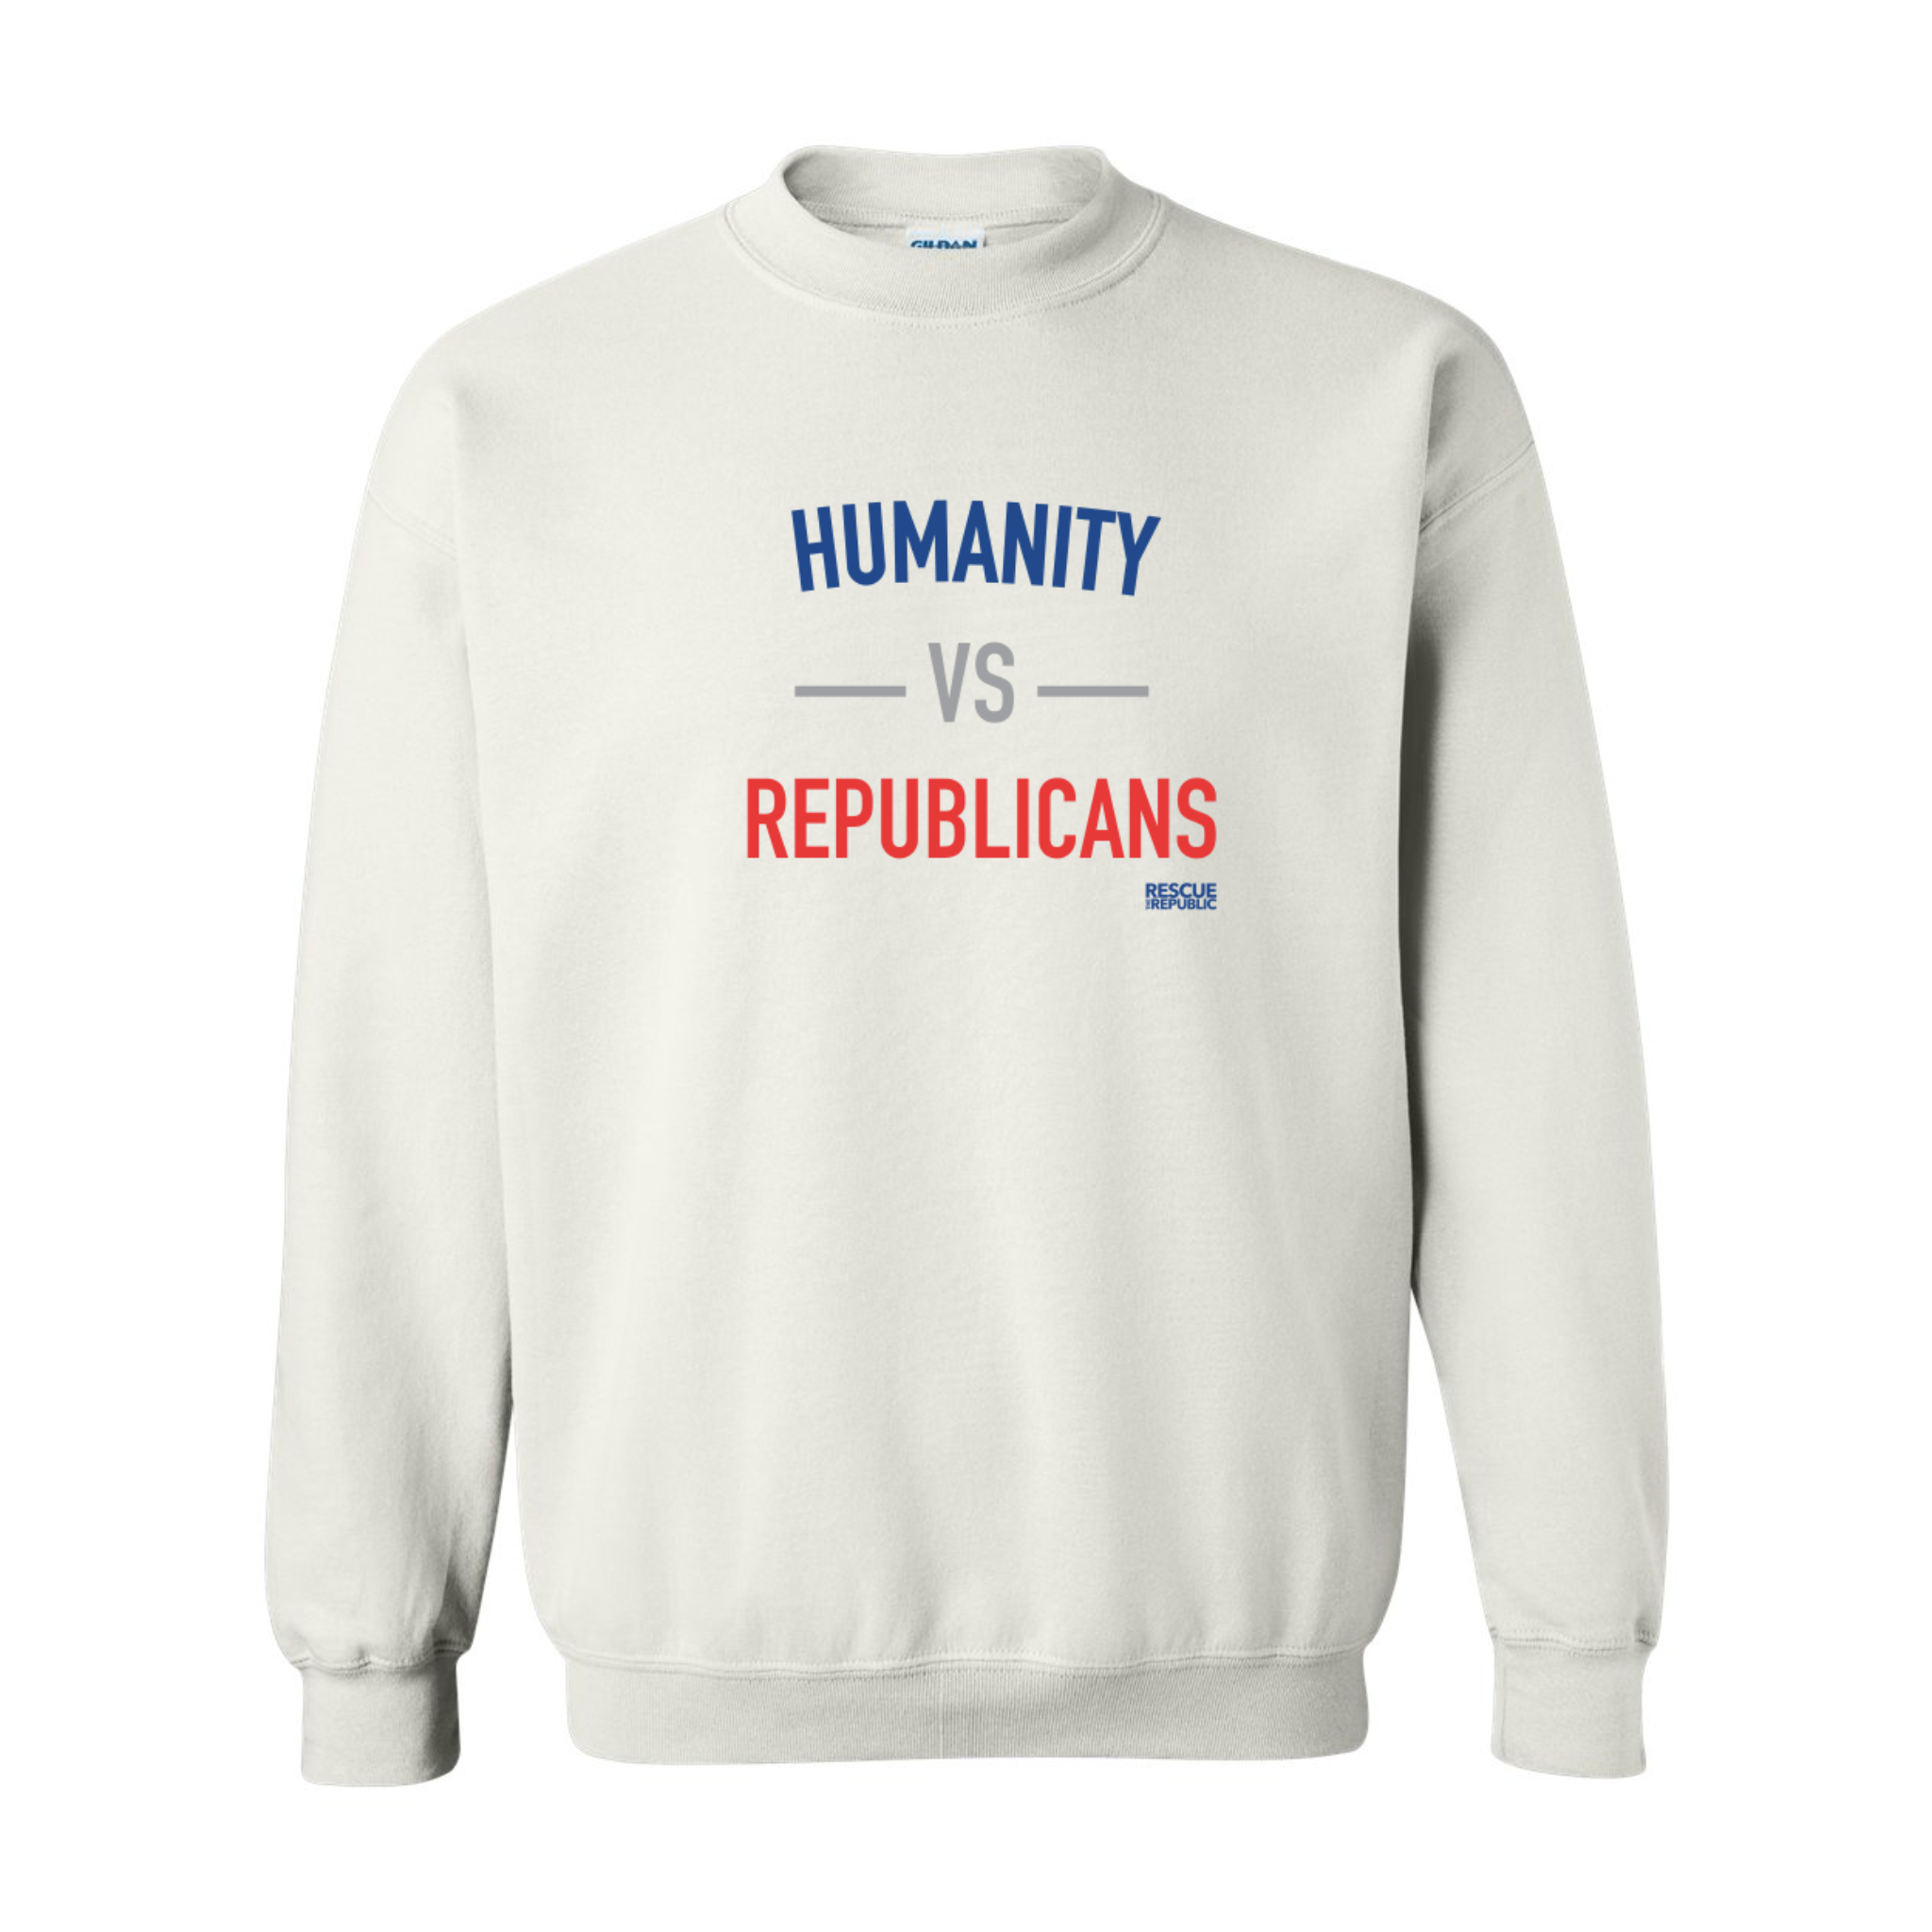 Humanity VS Republicans White Crewneck Sweatshirt